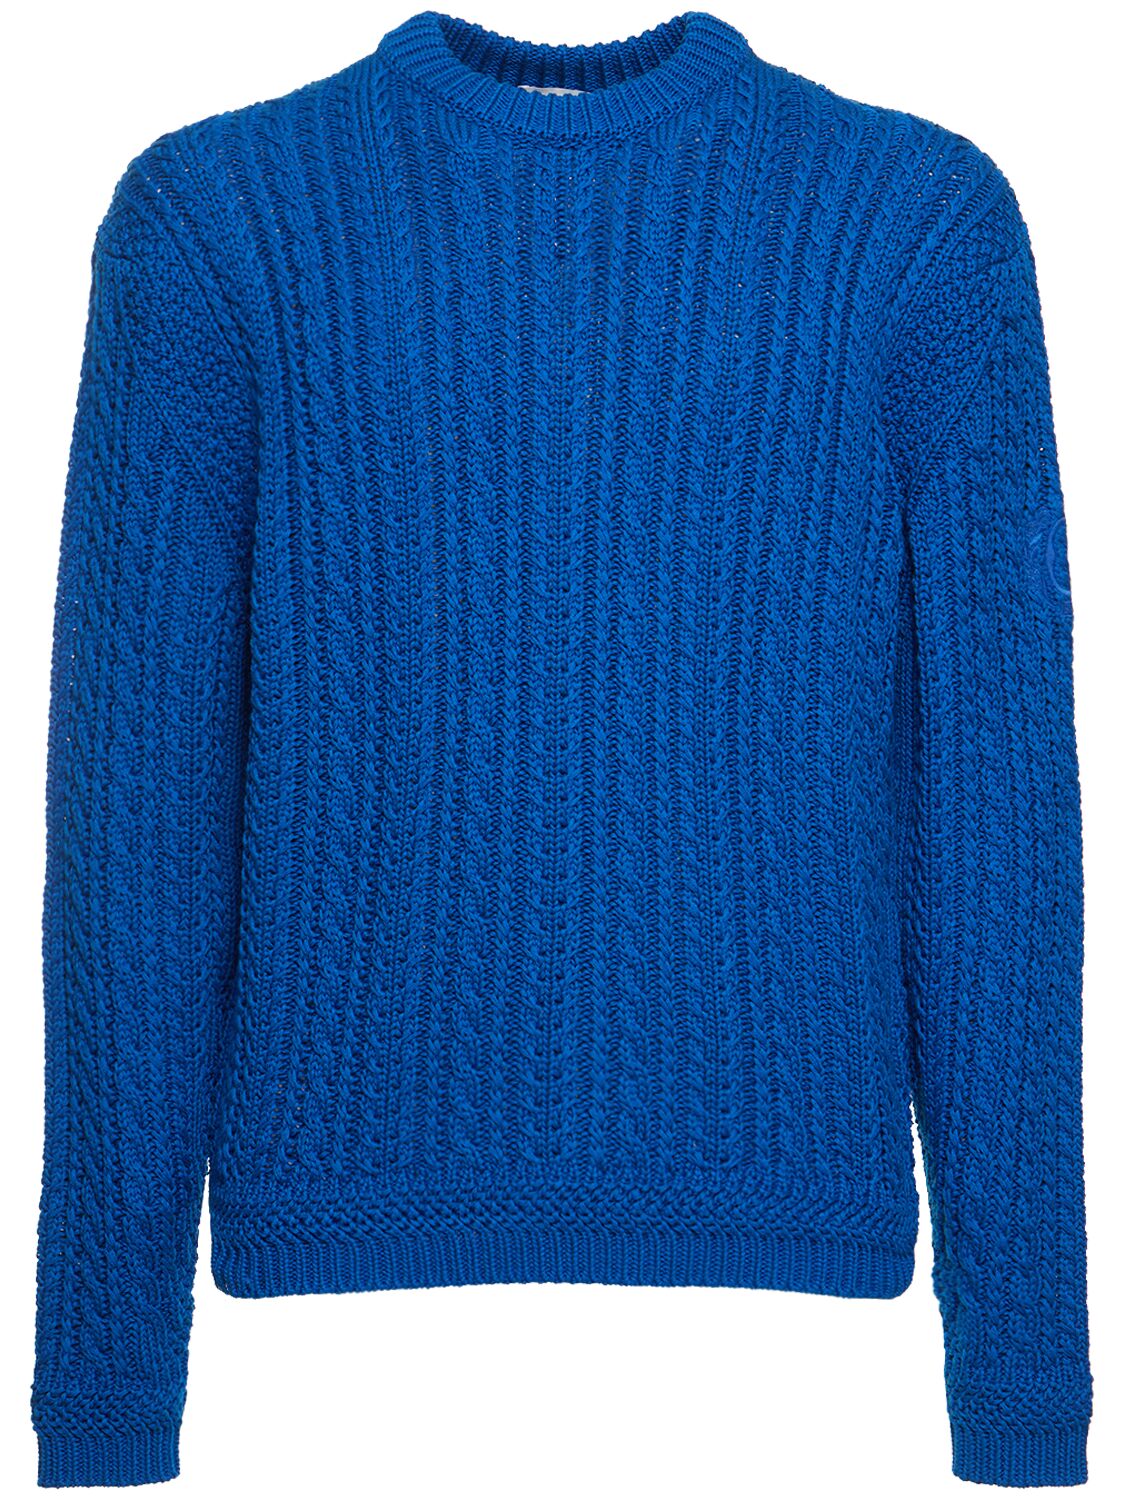 Image of Cotton Crewneck Sweater